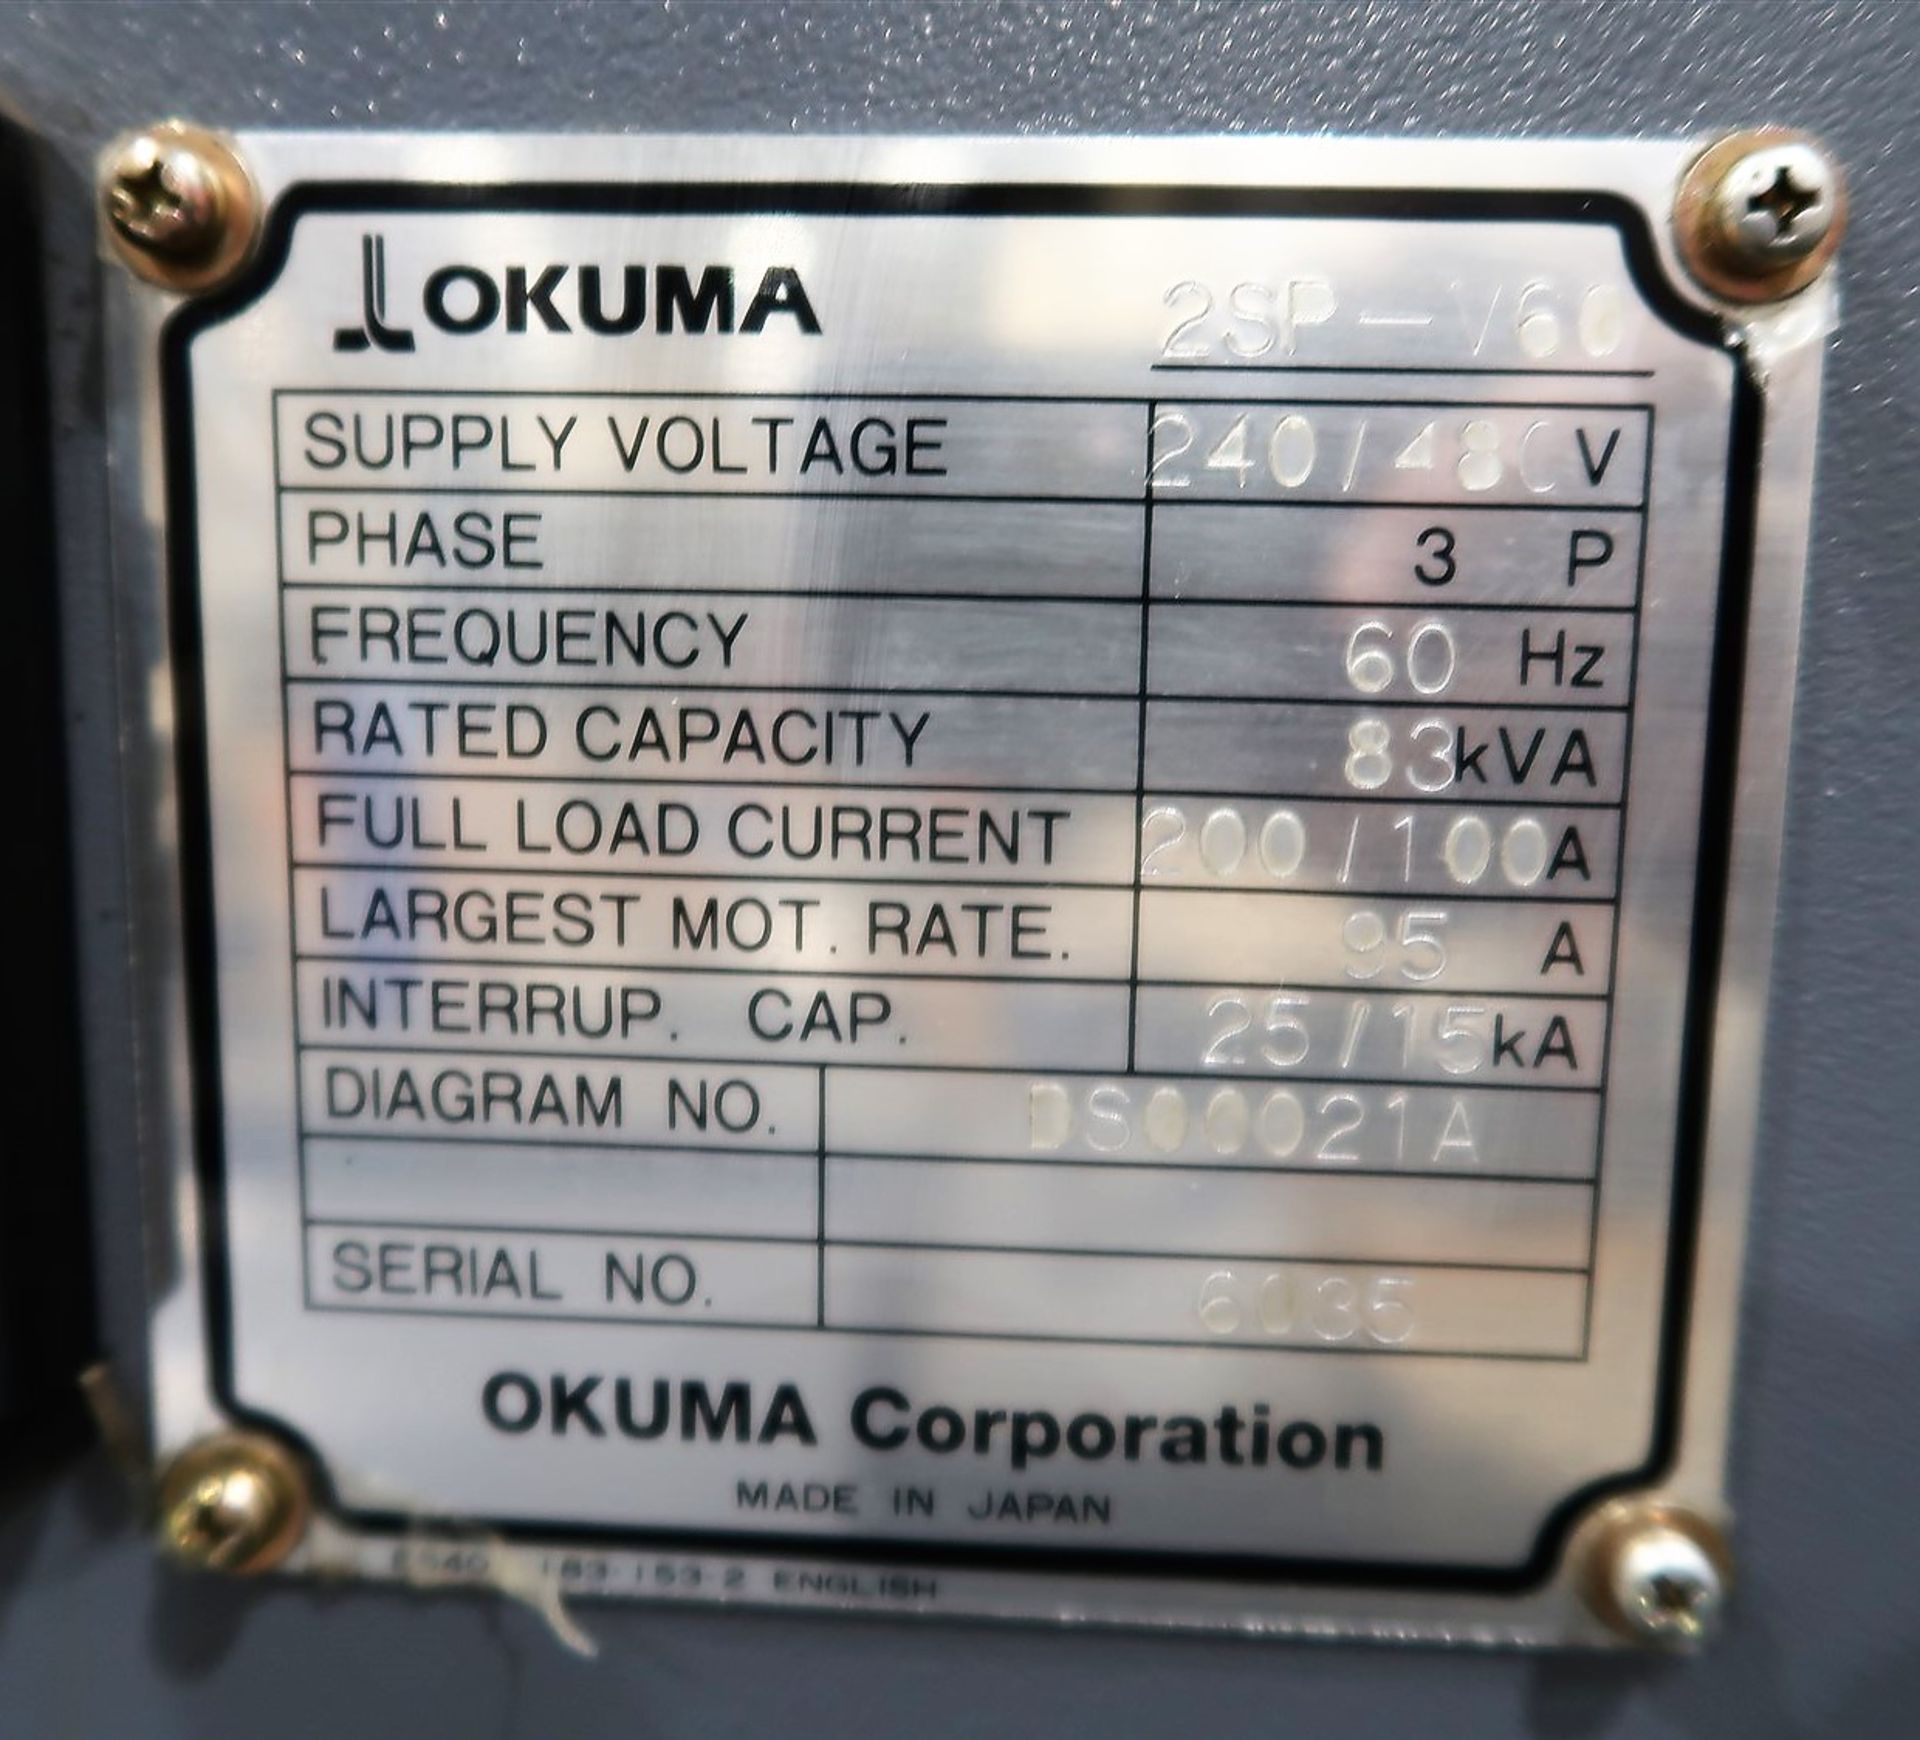 2006 OKUMA 2SP V60 TWIN SPINDLE CNC VERTICAL TURNING CENTERS, FANUC 18i T CNC CONTROL, 12-STATION - Image 9 of 10